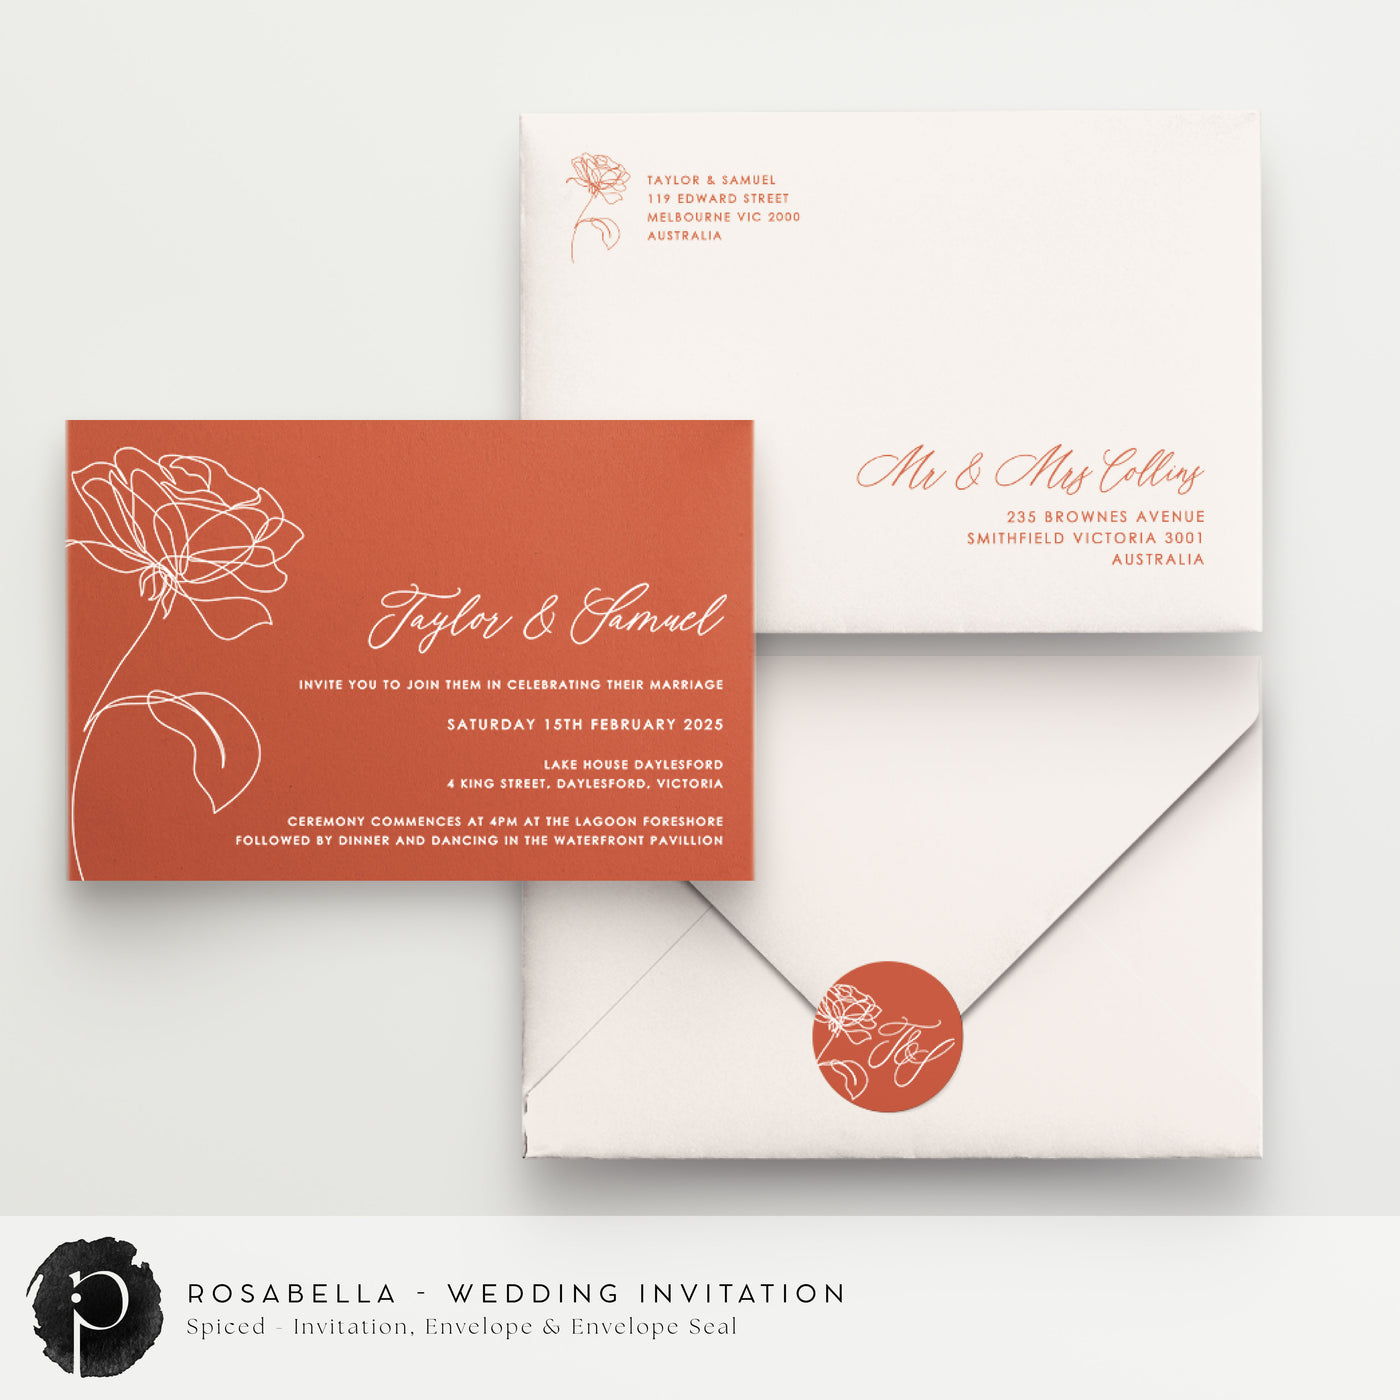 Rosabella - Wedding Invitations